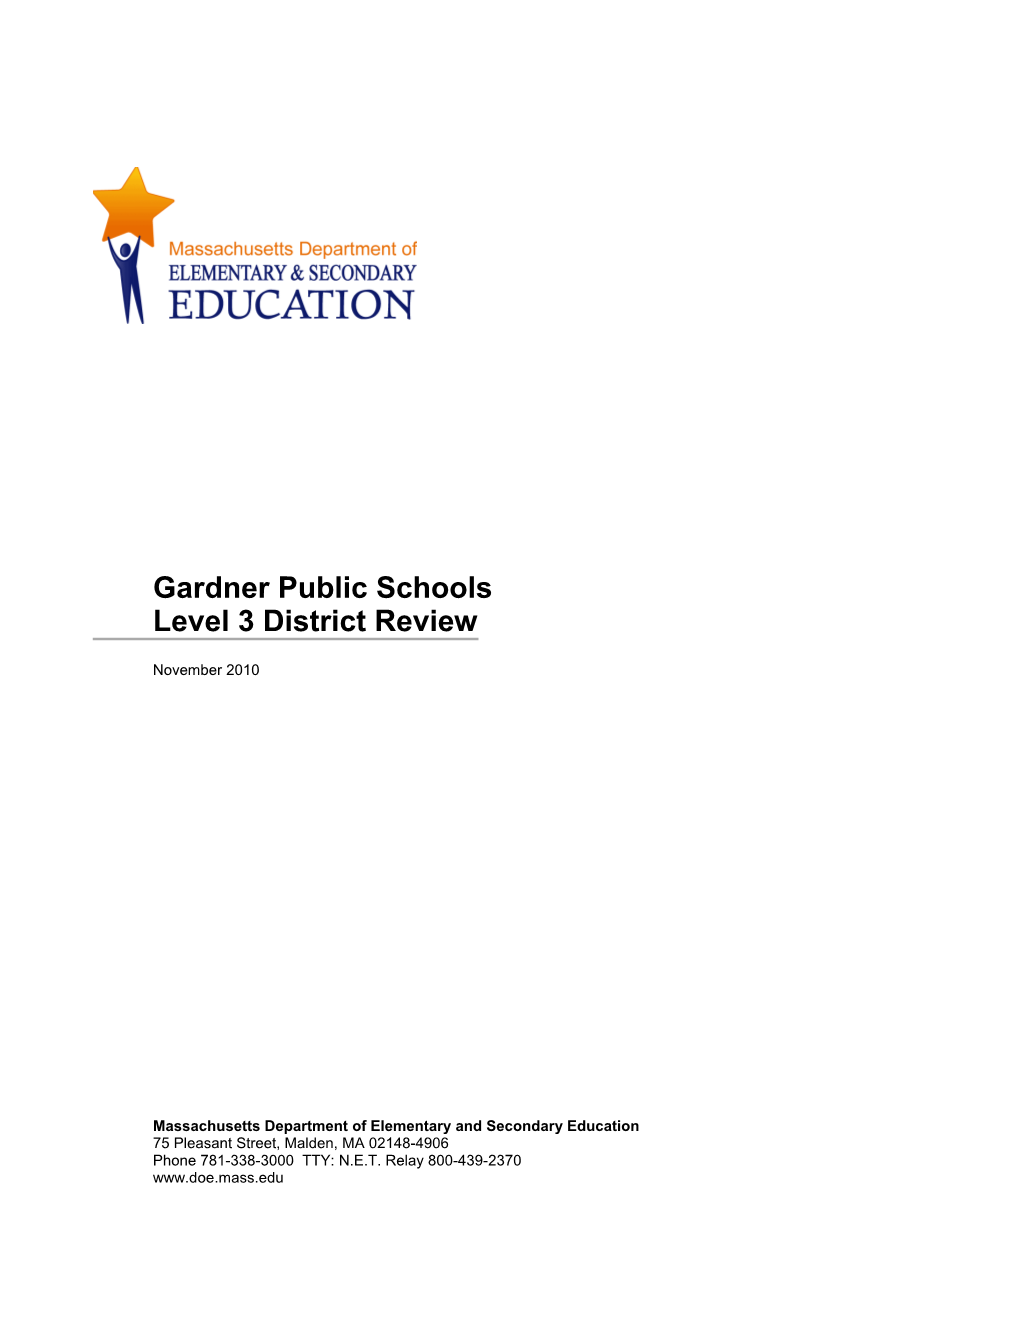 Gardner Public Schools, Level 3 Review Report, November 2010